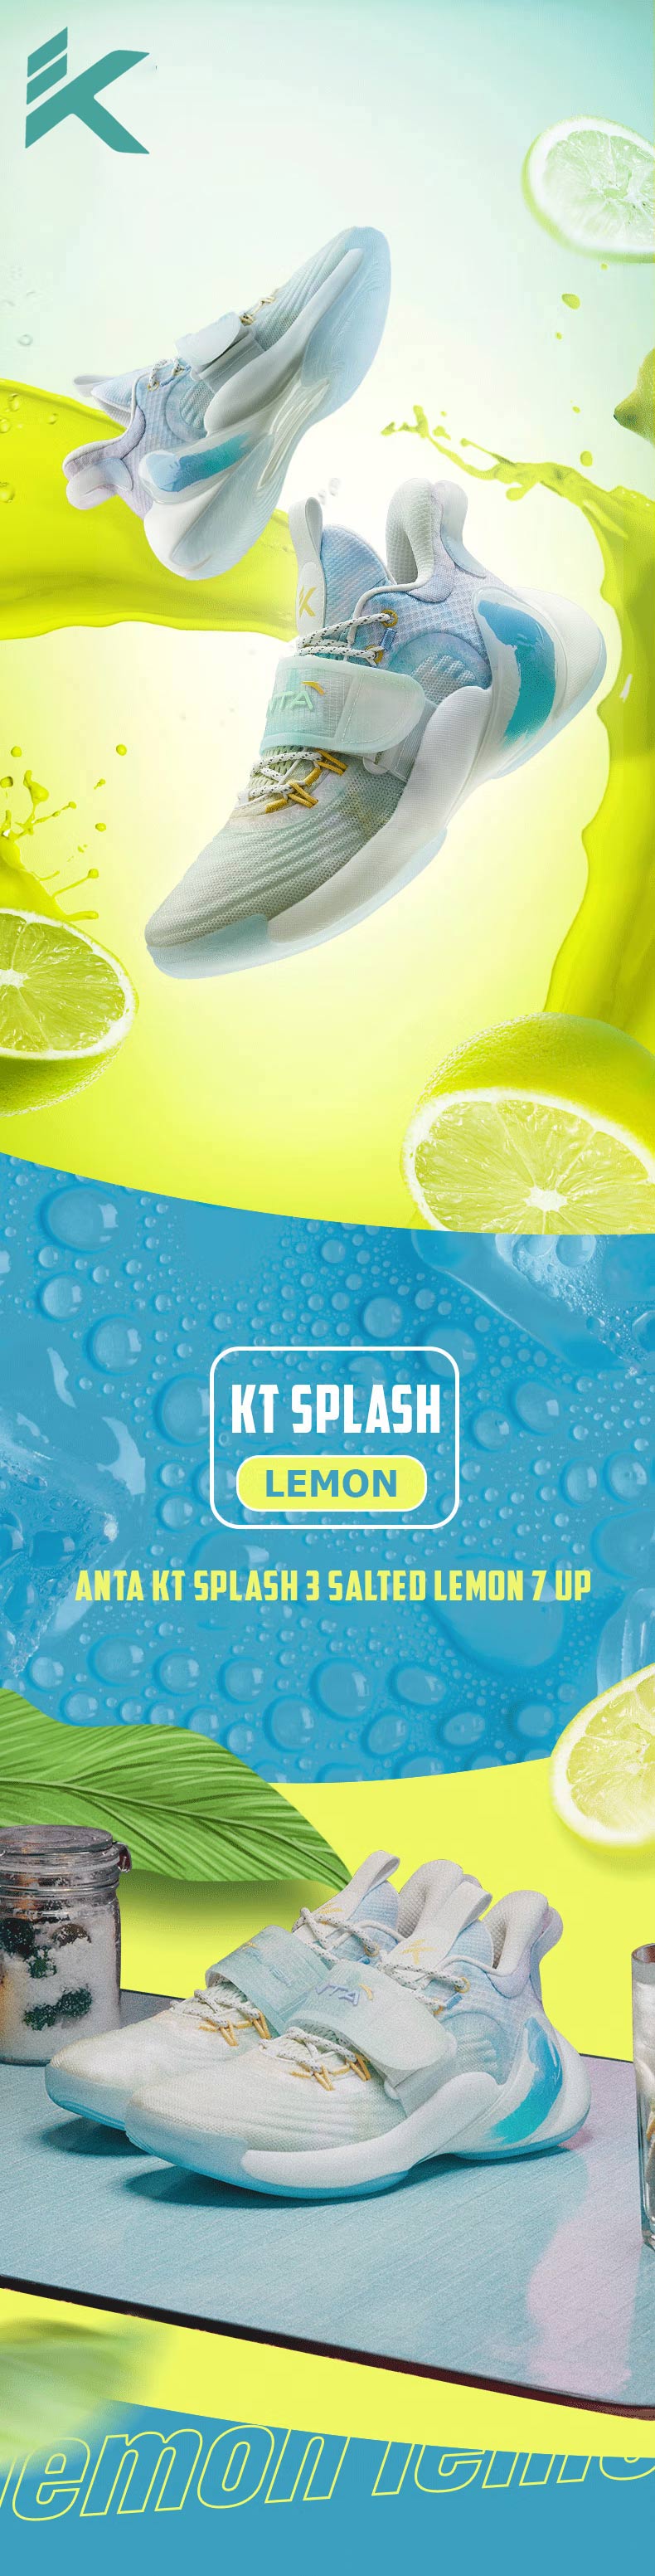 Anta KT Splash 3 Salted Lemon 7 Up